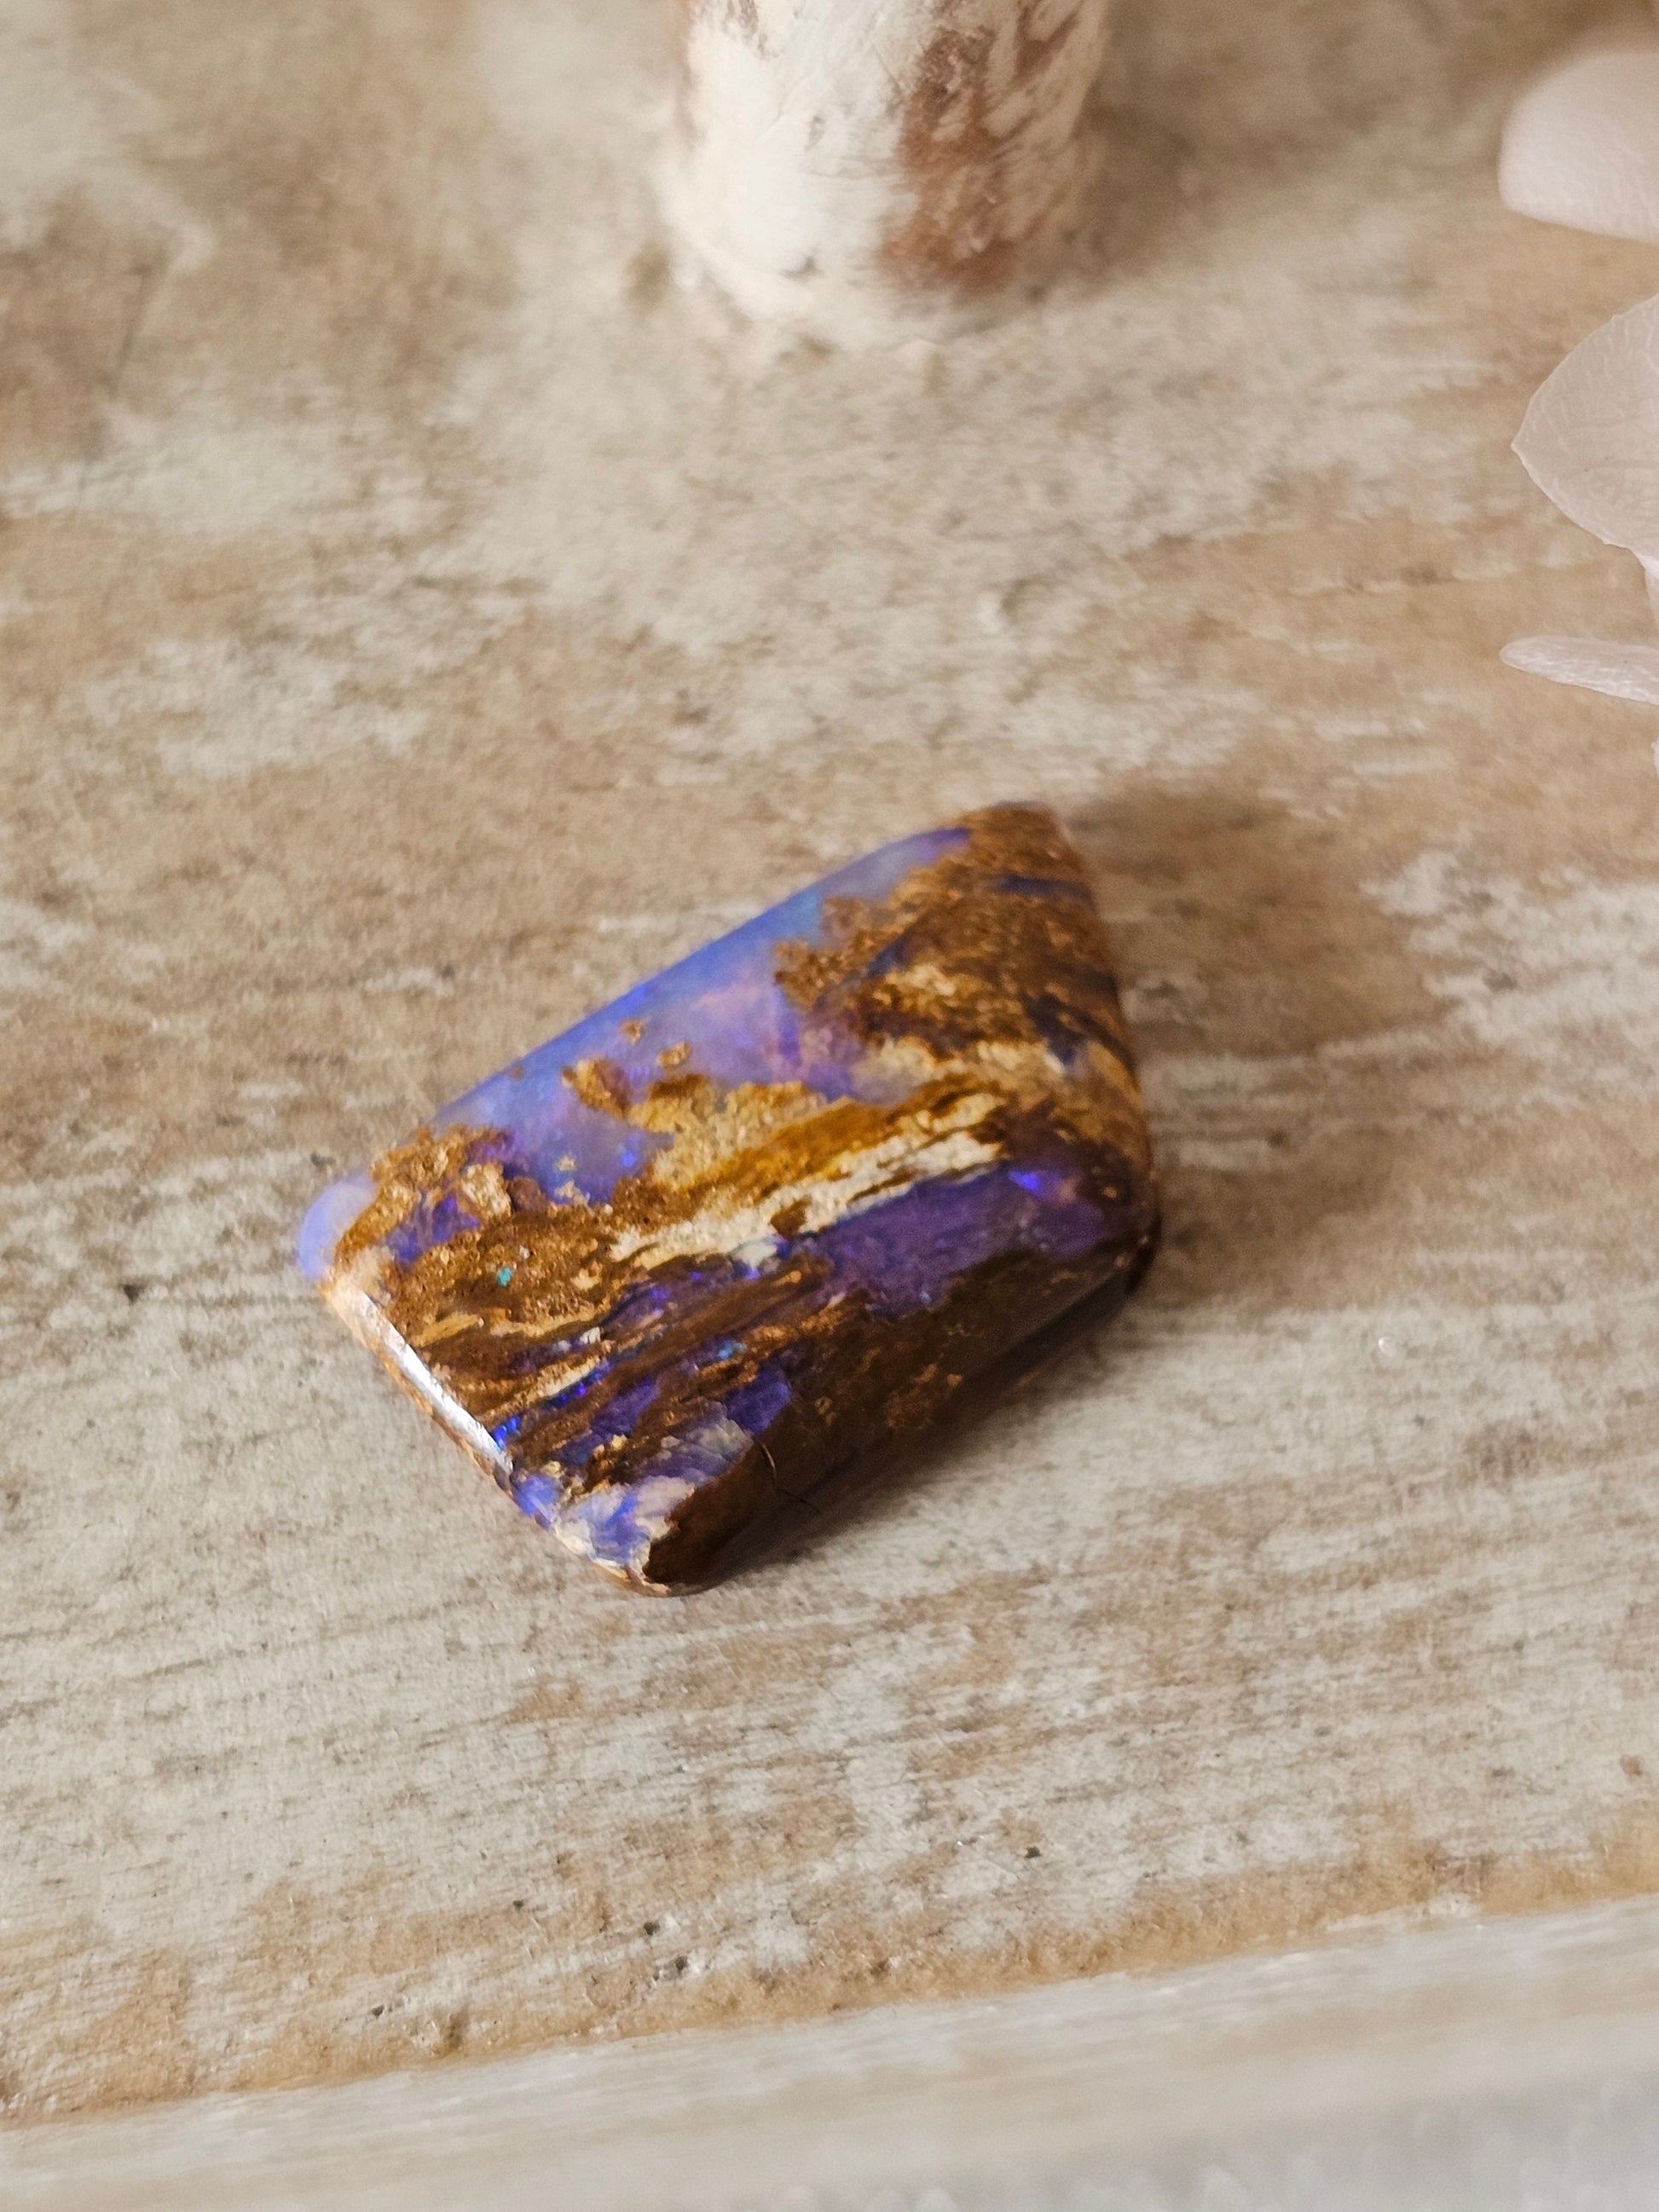 Boulder opal / Australia QLD / Opal Cabochon